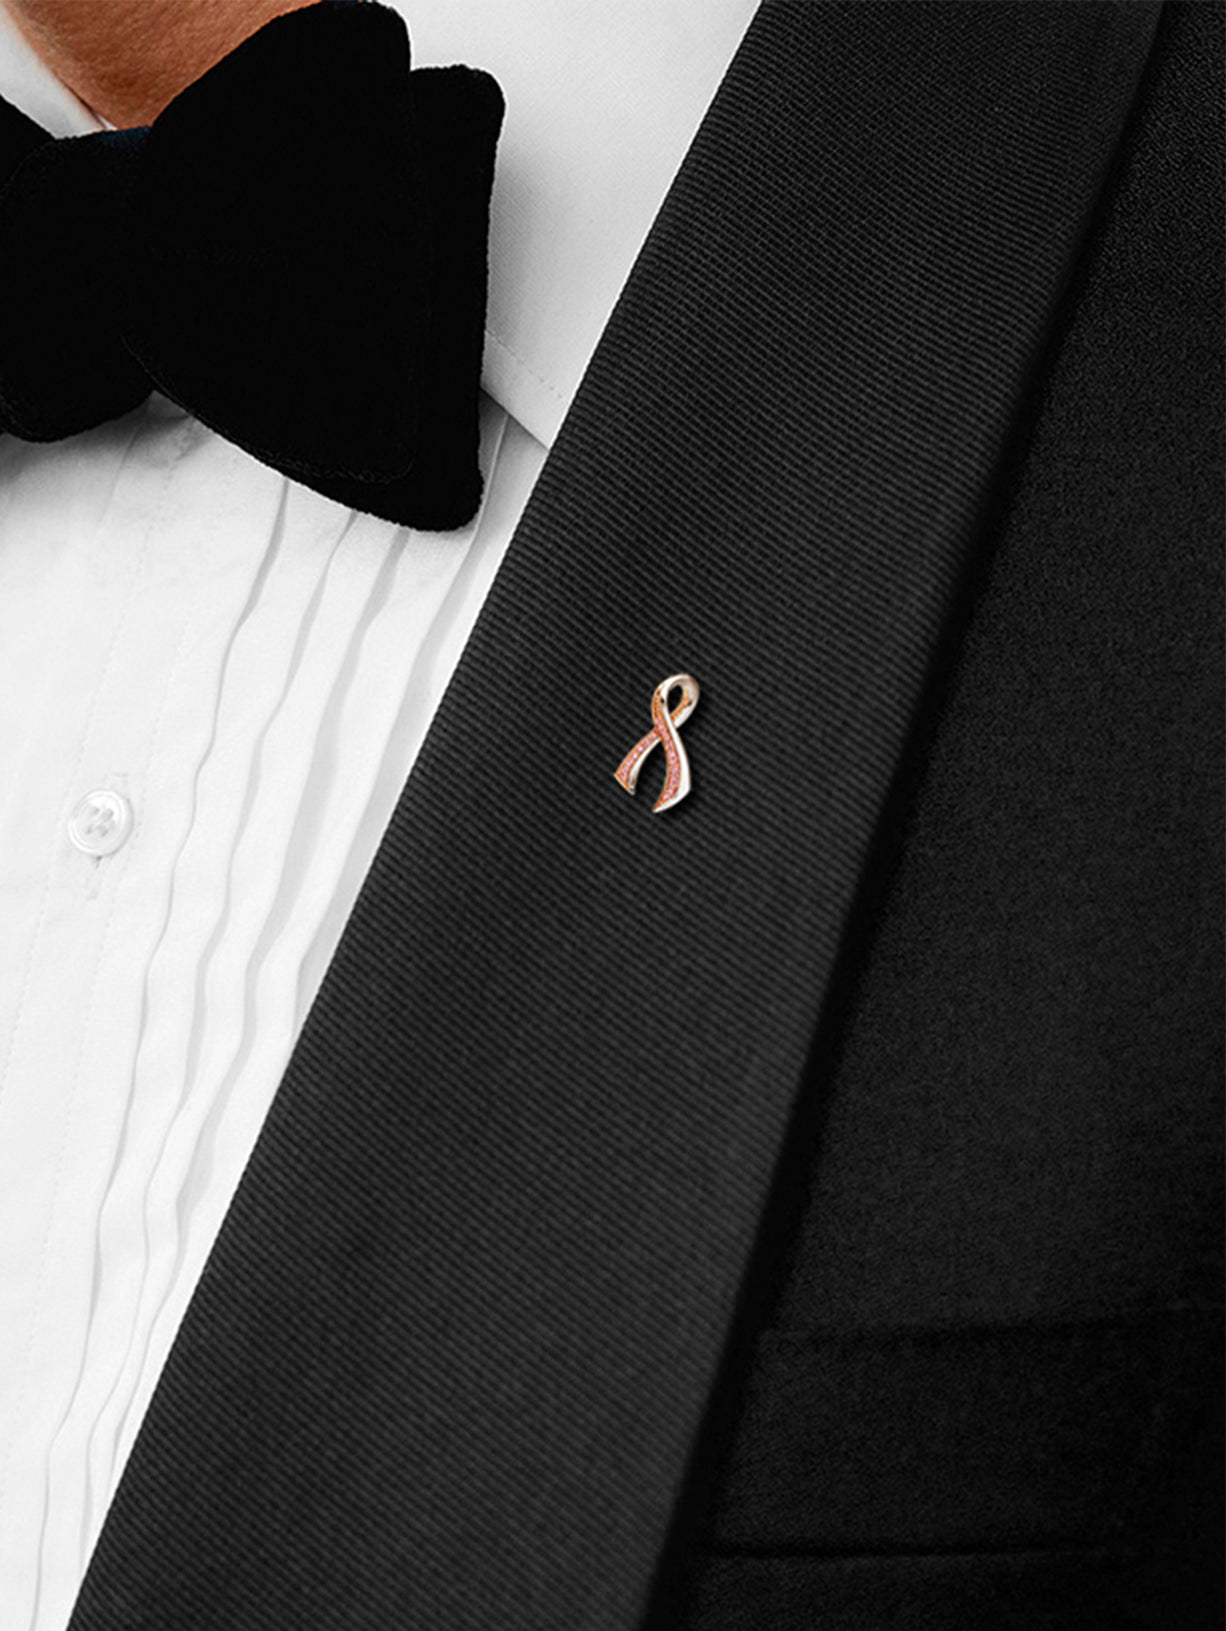 J Fine argyle pink diamond breast cancer ribbon lapel pin 